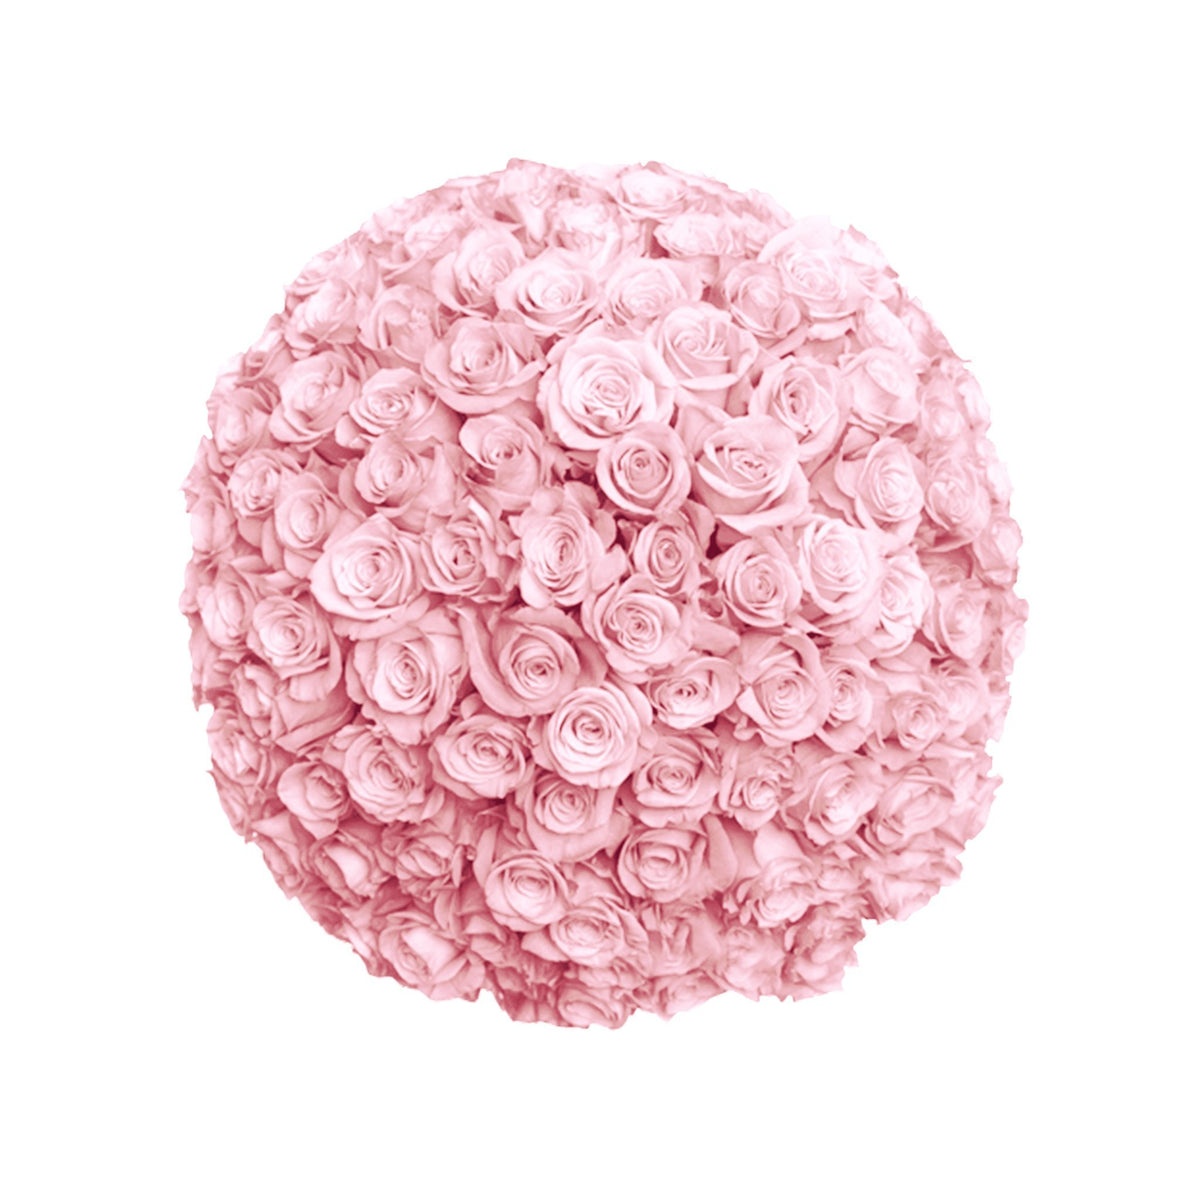 Fresh Roses in a Vase | 100 Light Pink Roses - Roses